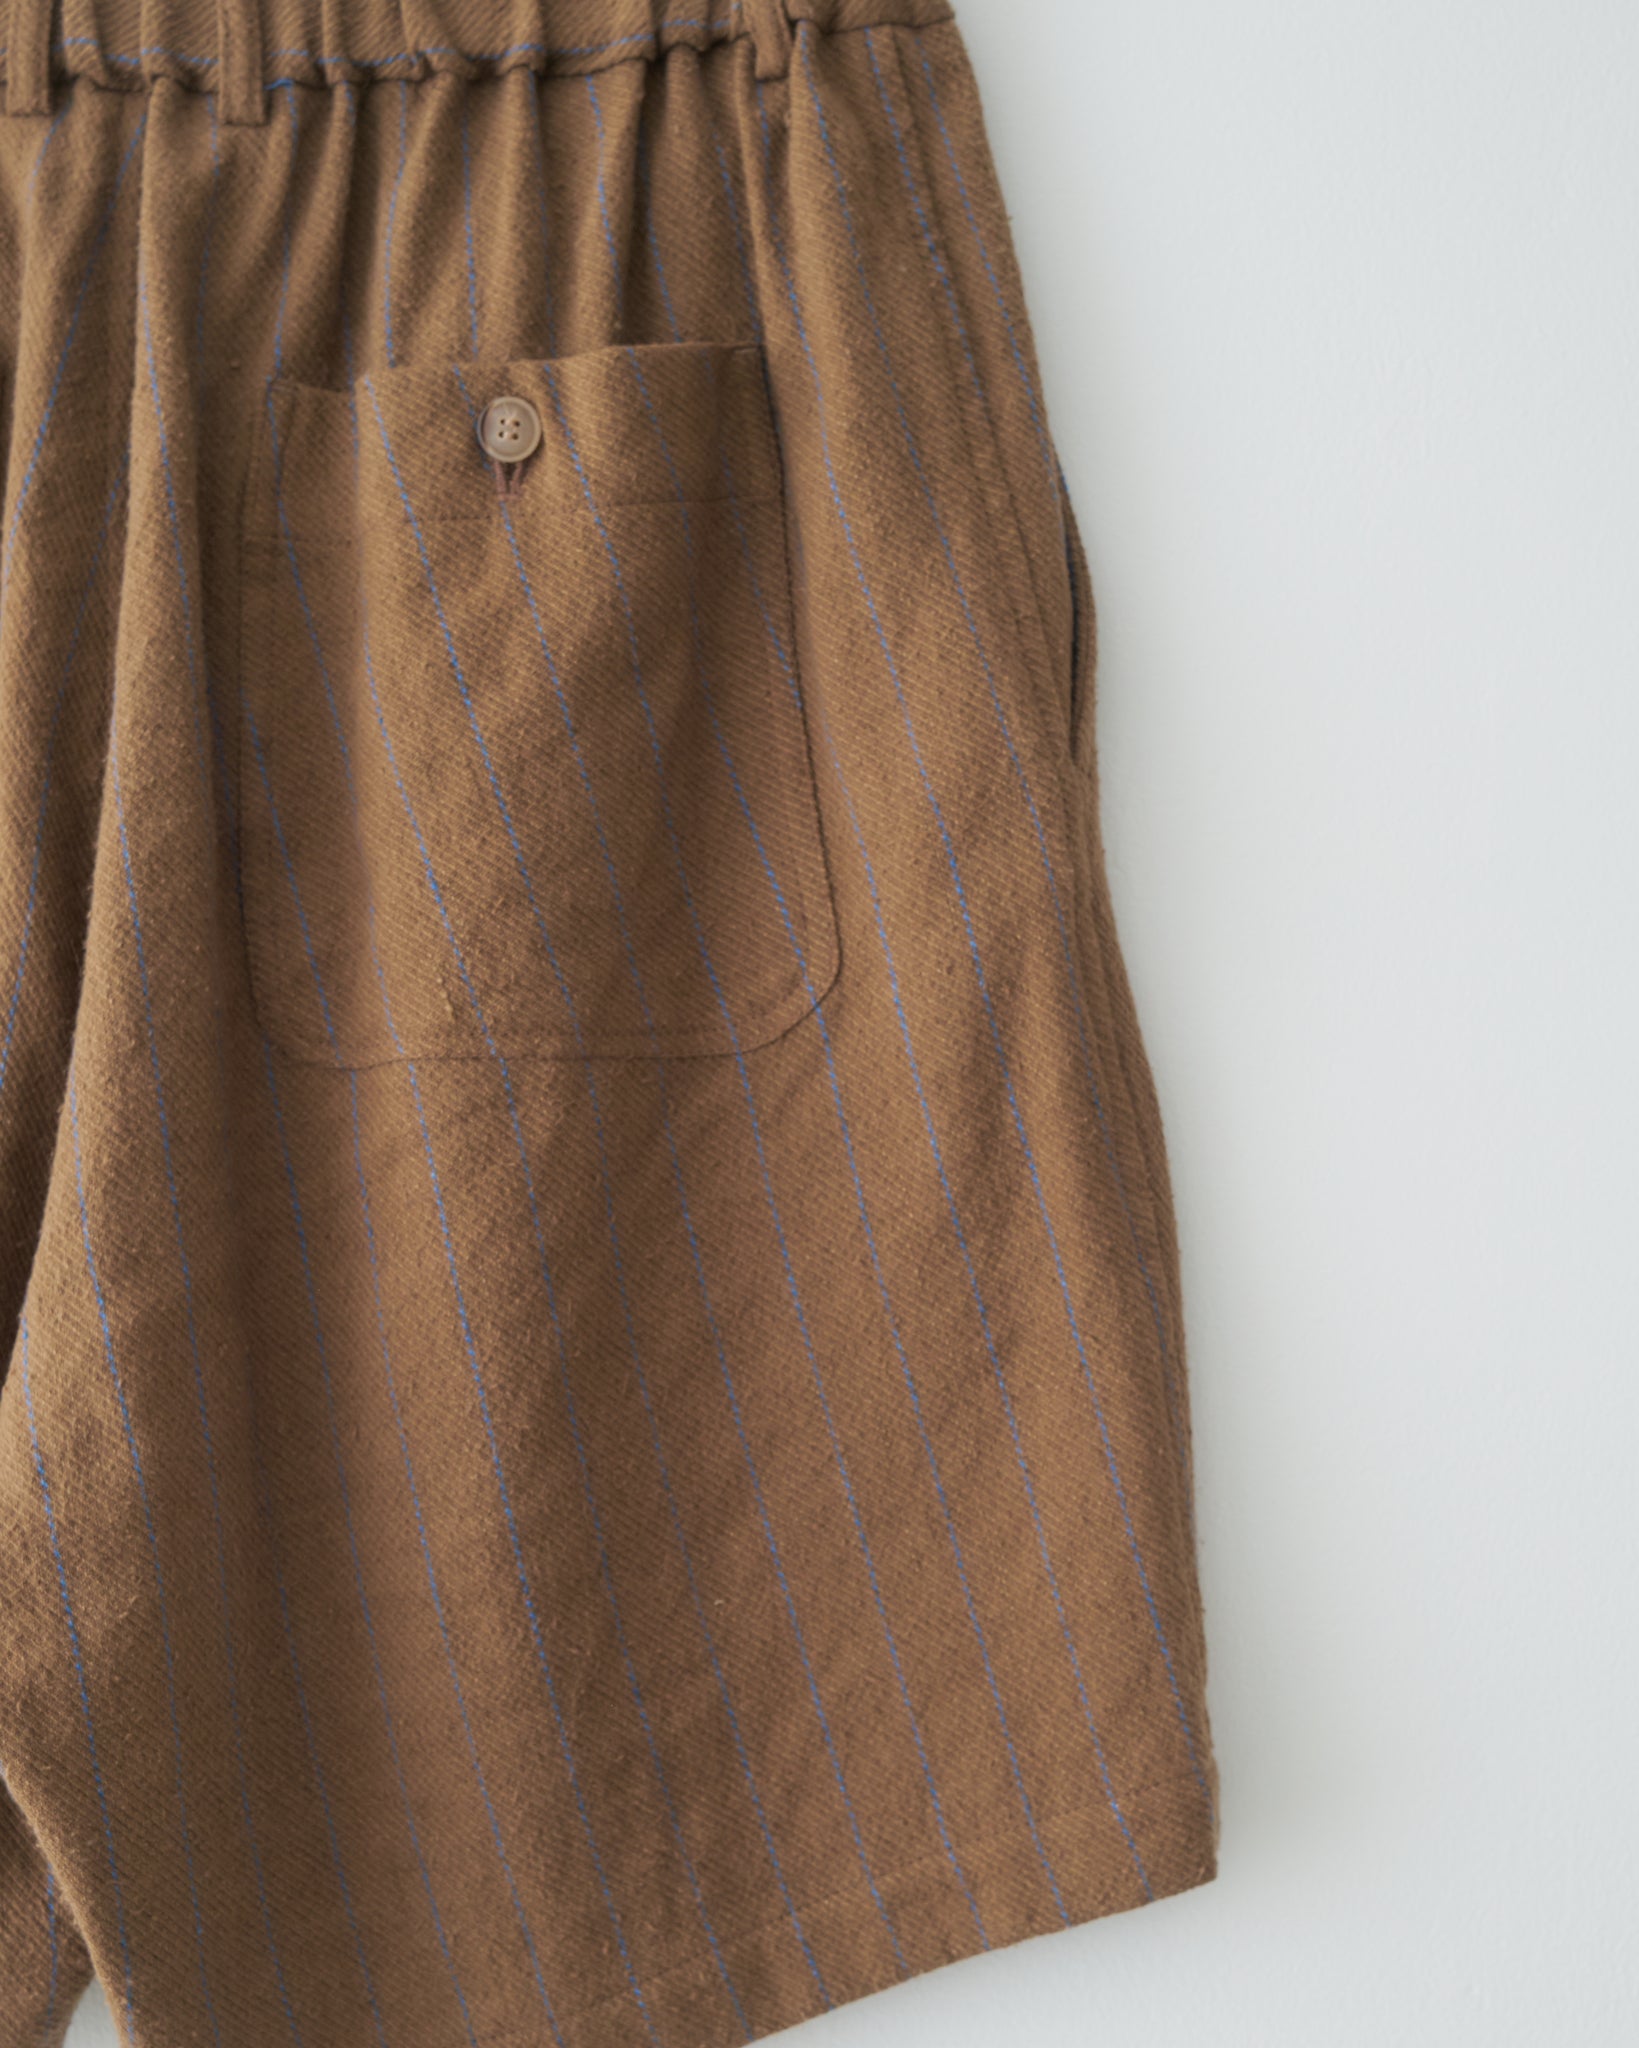 Antique Shorts, Brown